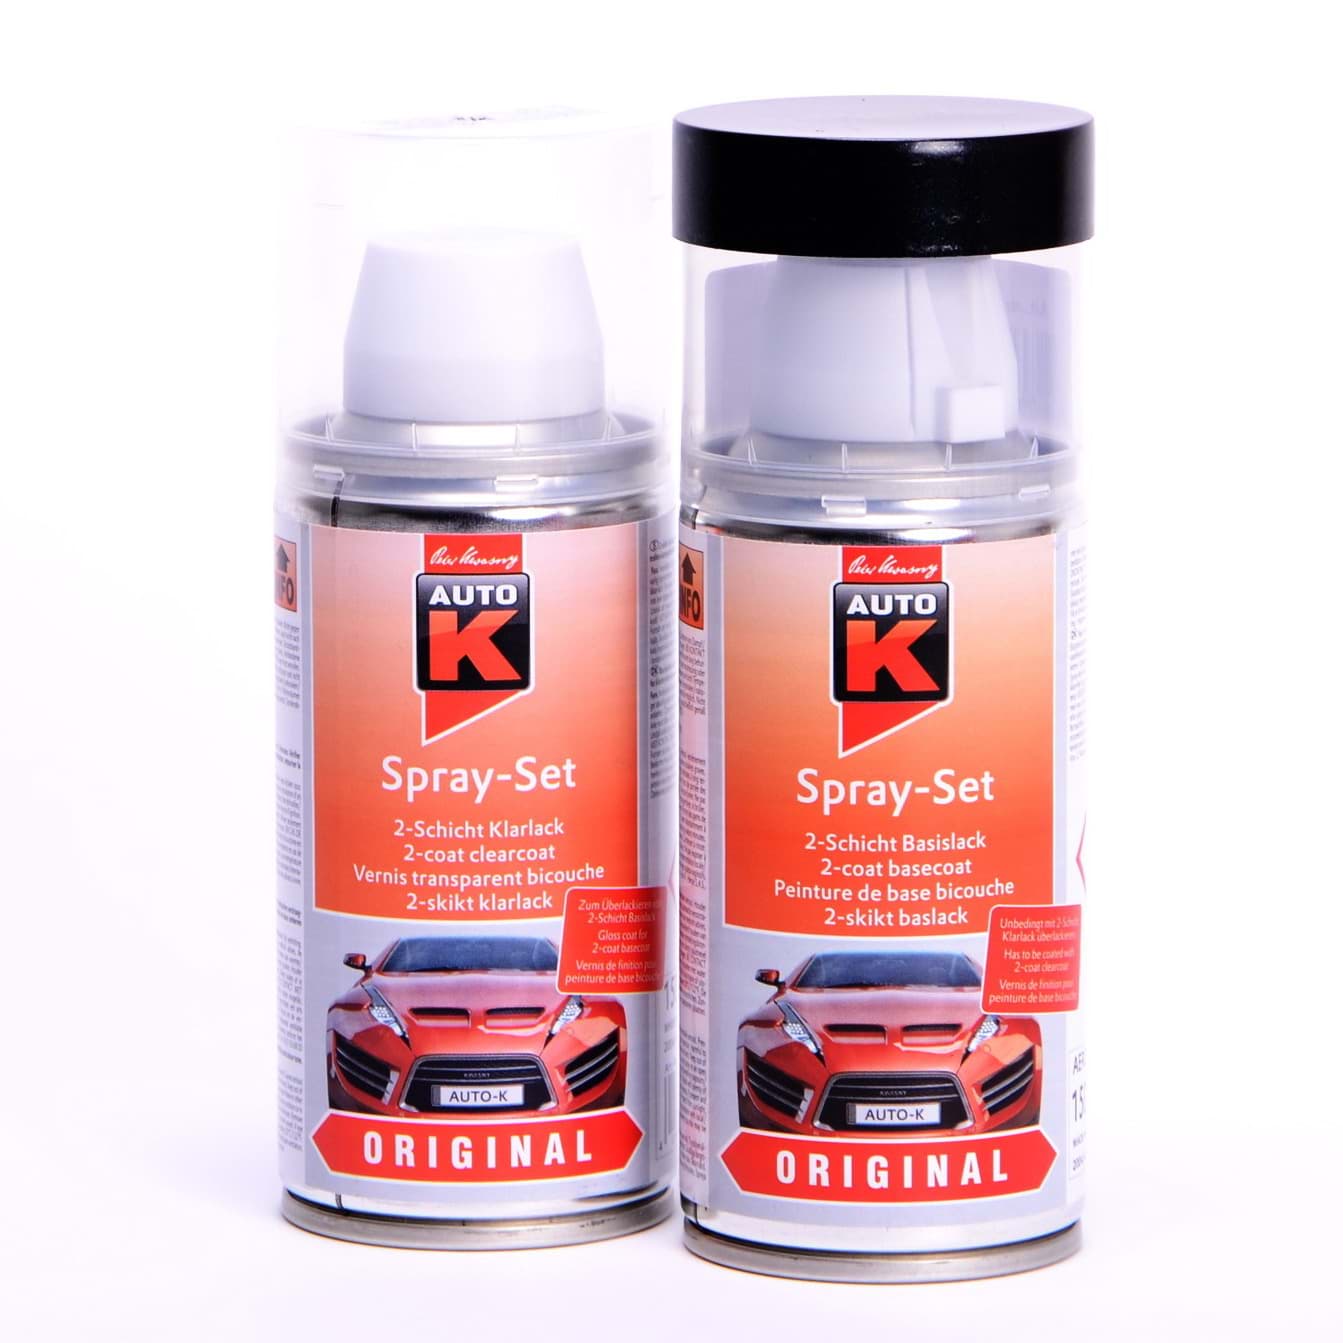 Auto-K Spray-Set Autolack für Peugeot MOYC Gris Quartz met 42343 resmi